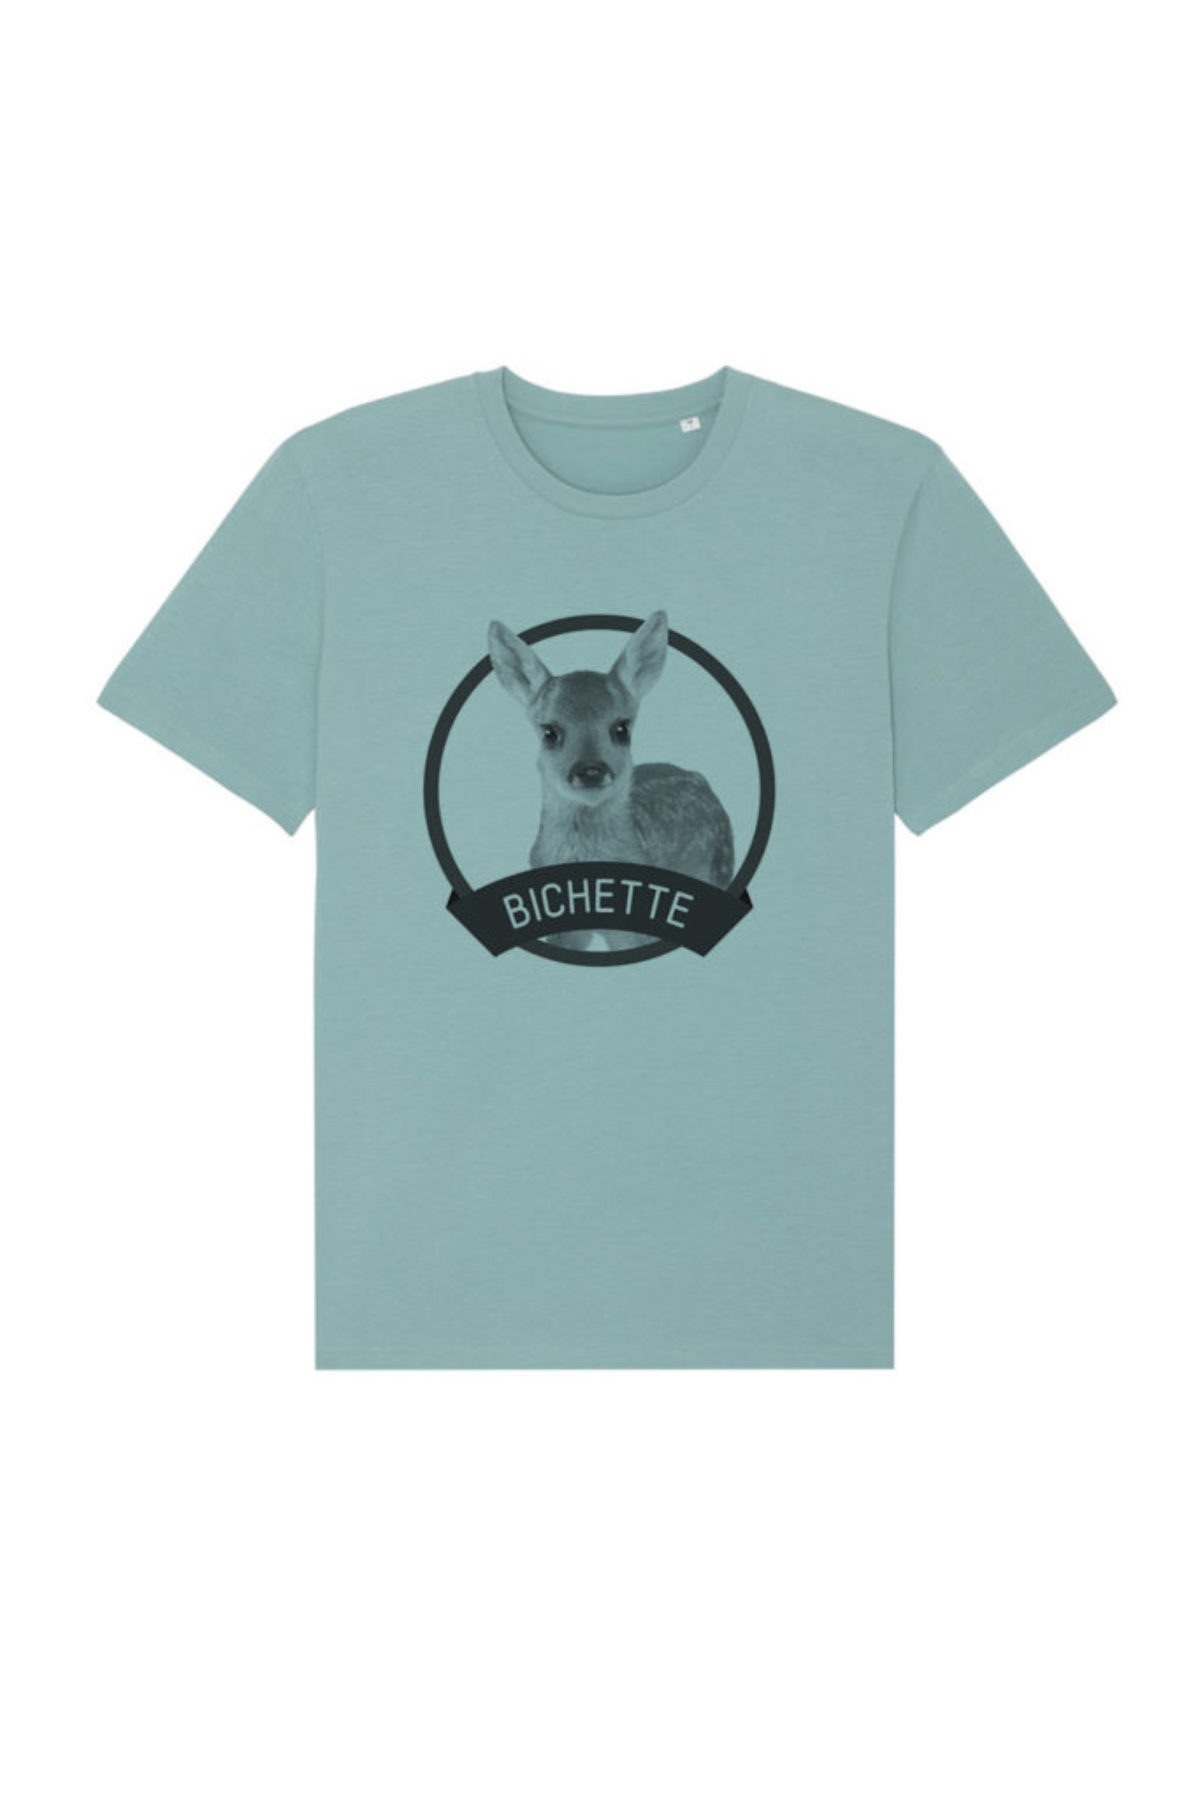 T-shirt Adulte - Bichette